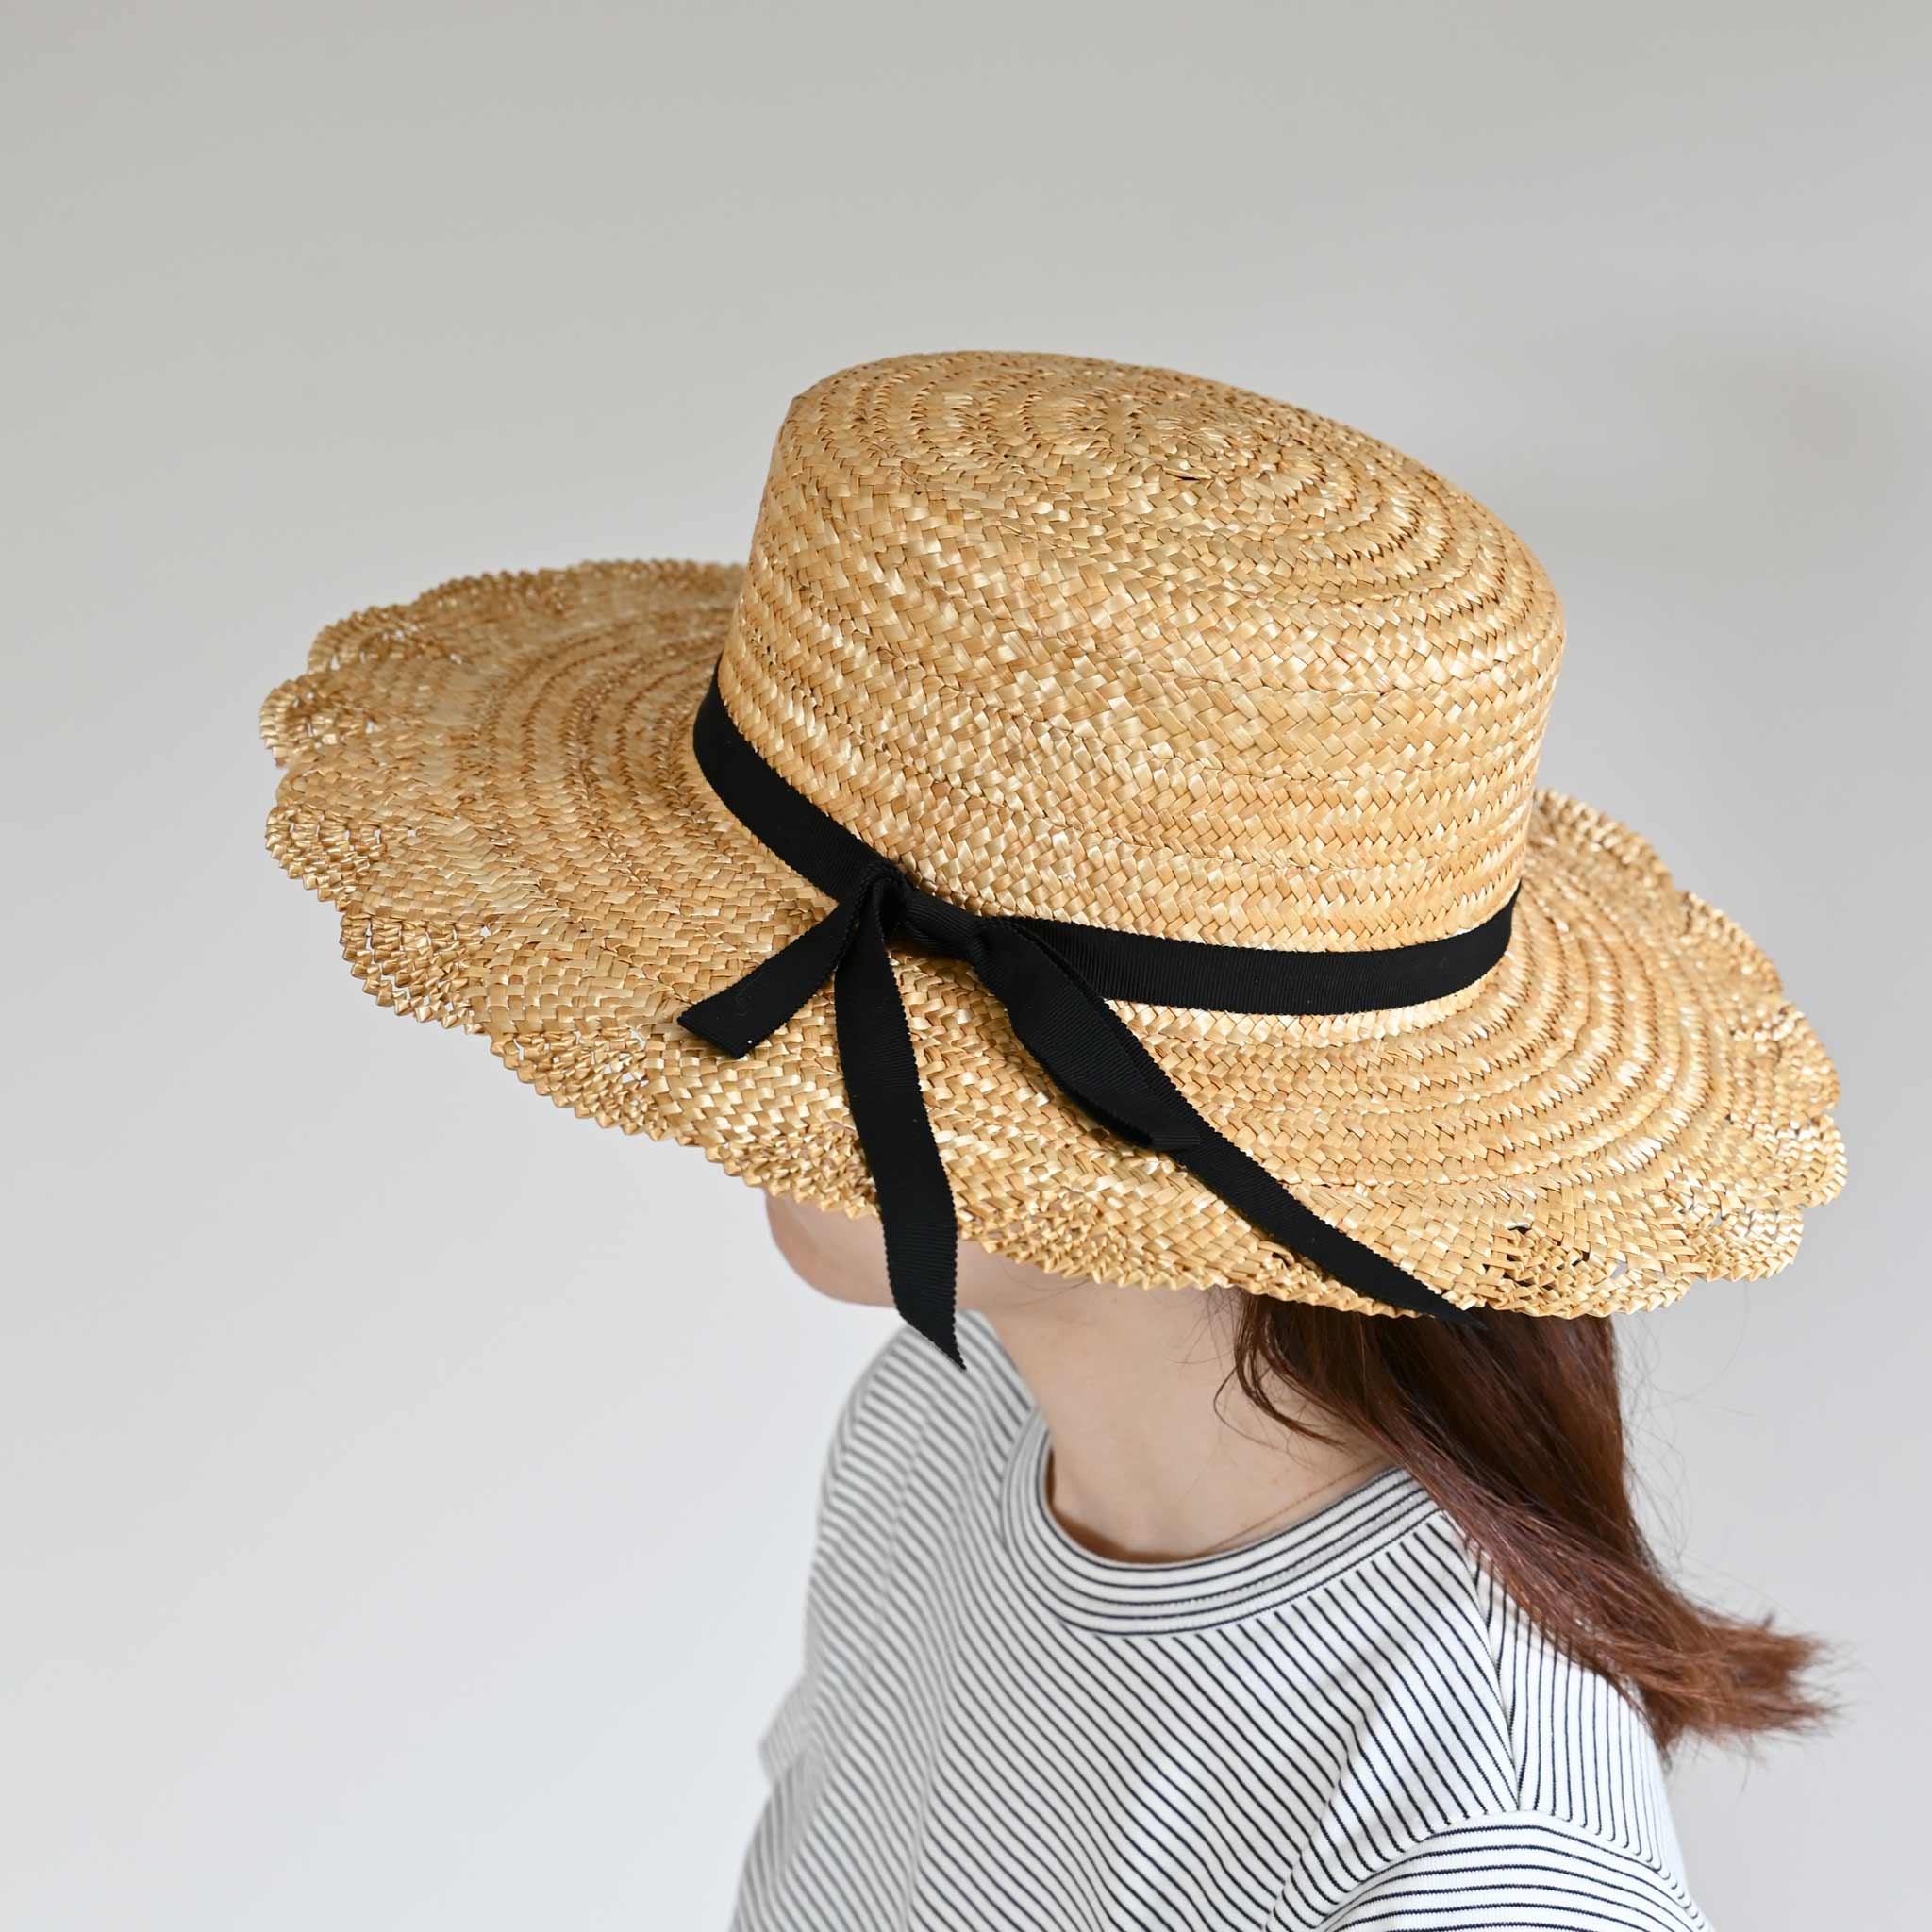 POP UP】日本製の麦わら帽子を展開する石田製帽の商品を期間限定で販売。